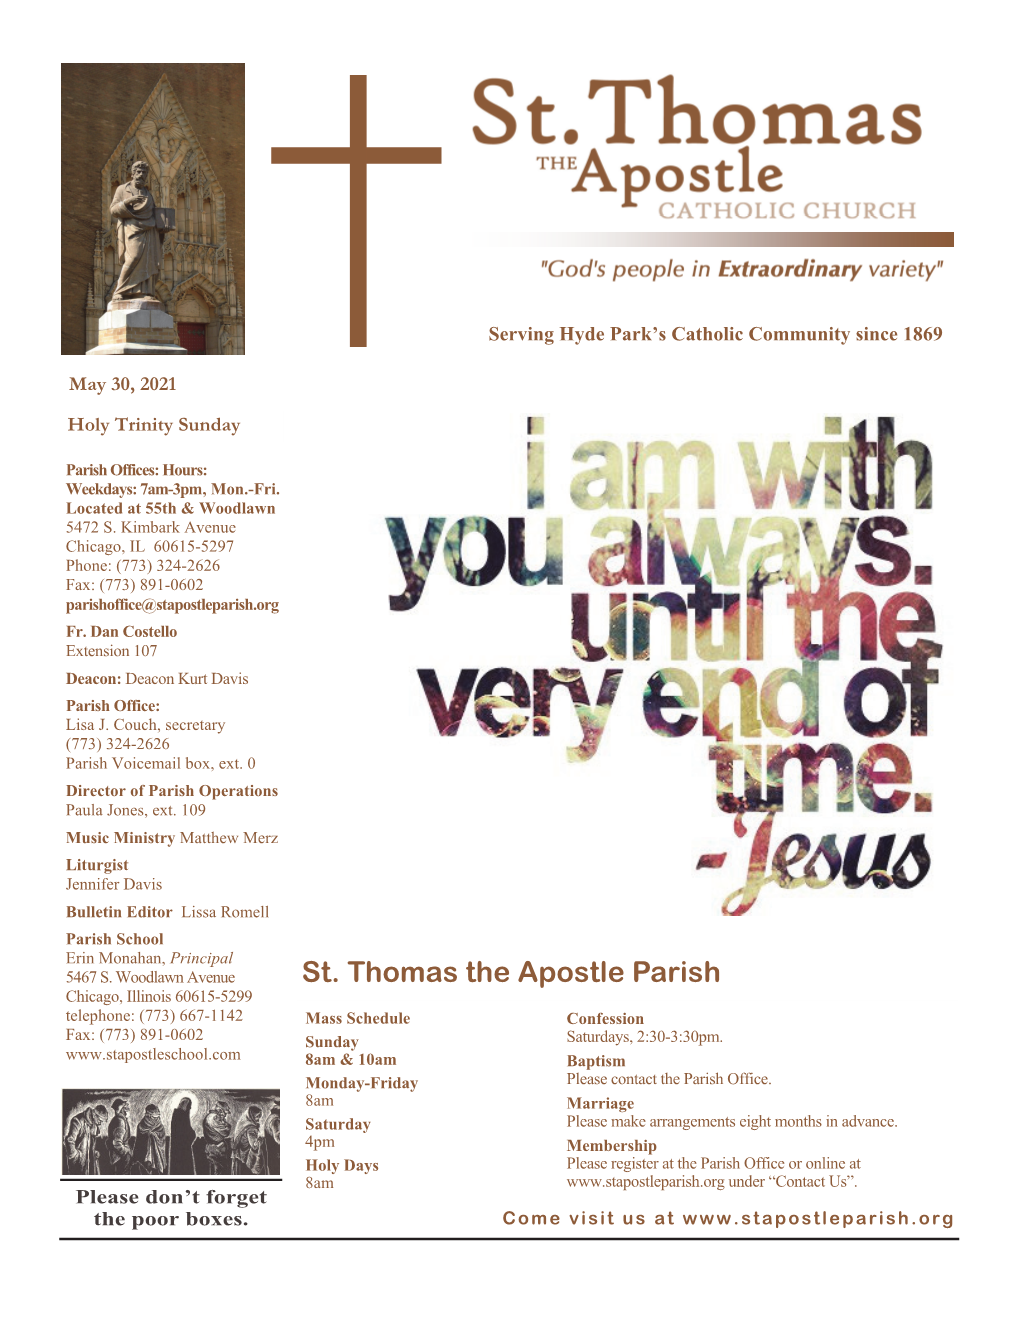 St. Thomas the Apostle Parish Chicago, Illinois 60615-5299 Telephone: (773) 667-1142 Mass Schedule Confession Fax: (773) 891-0602 Sunday Saturdays, 2:30-3:30Pm